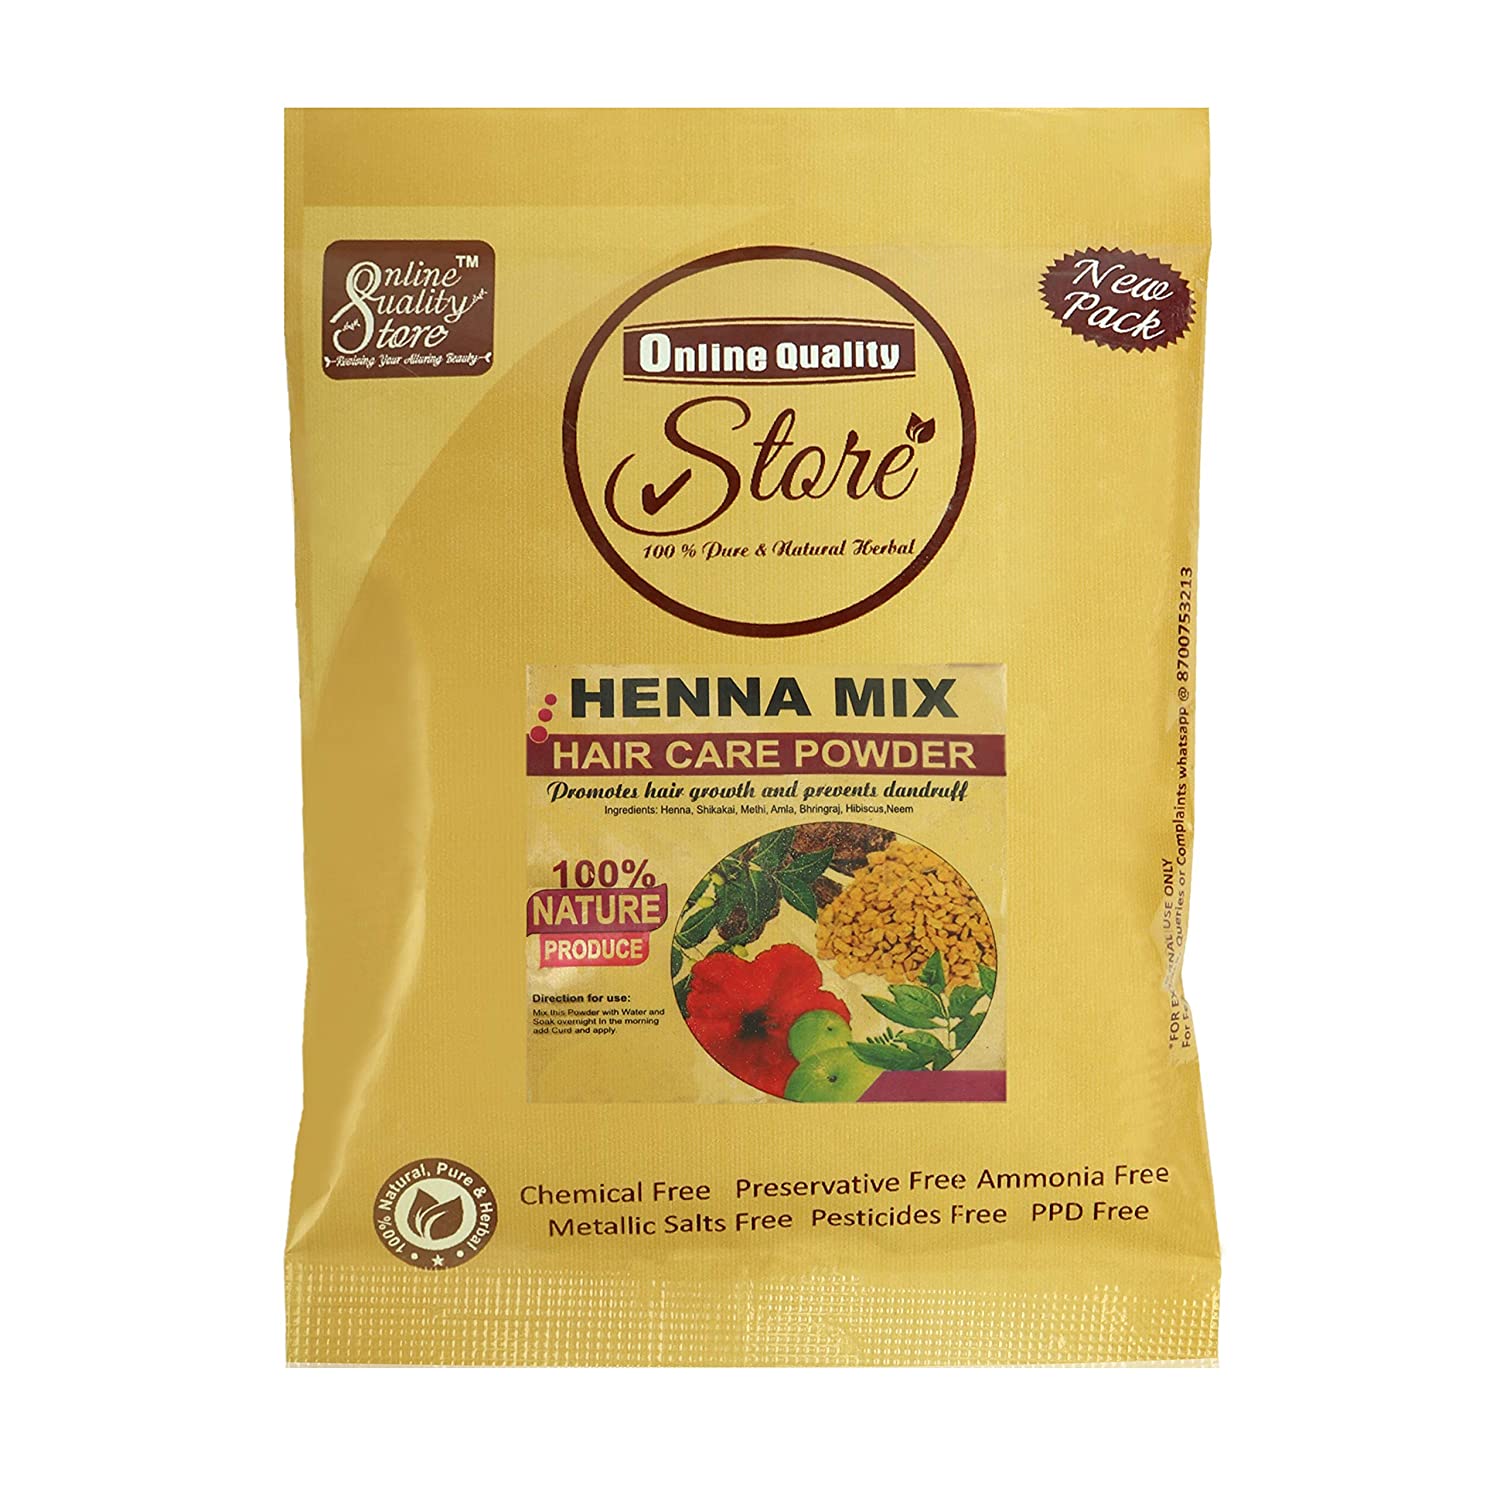 Henna Mix Powder ,50g - Online Quality Store Official Website